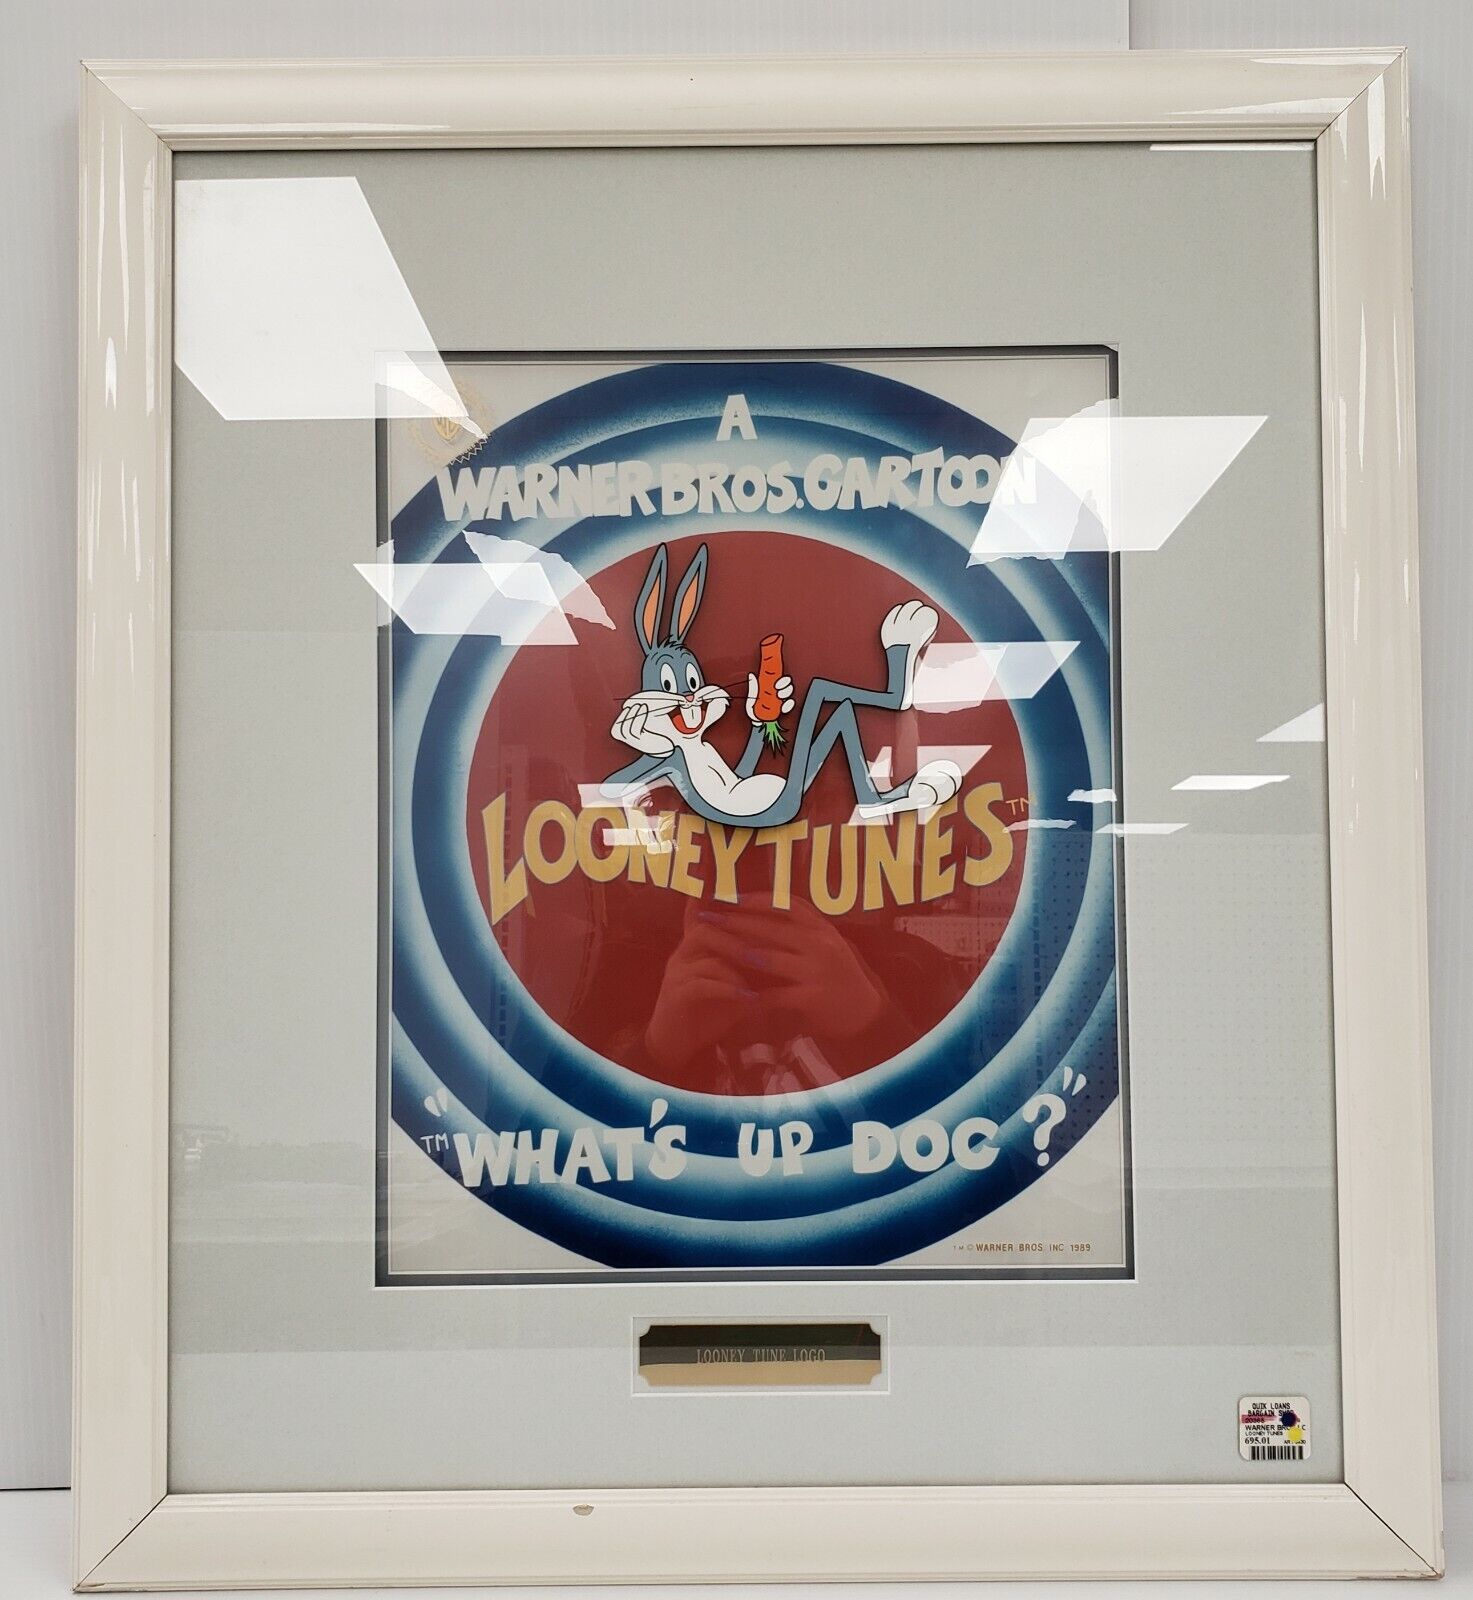 (I-2706) Warner Brothers Looney Tunes Logo Photo - 1989